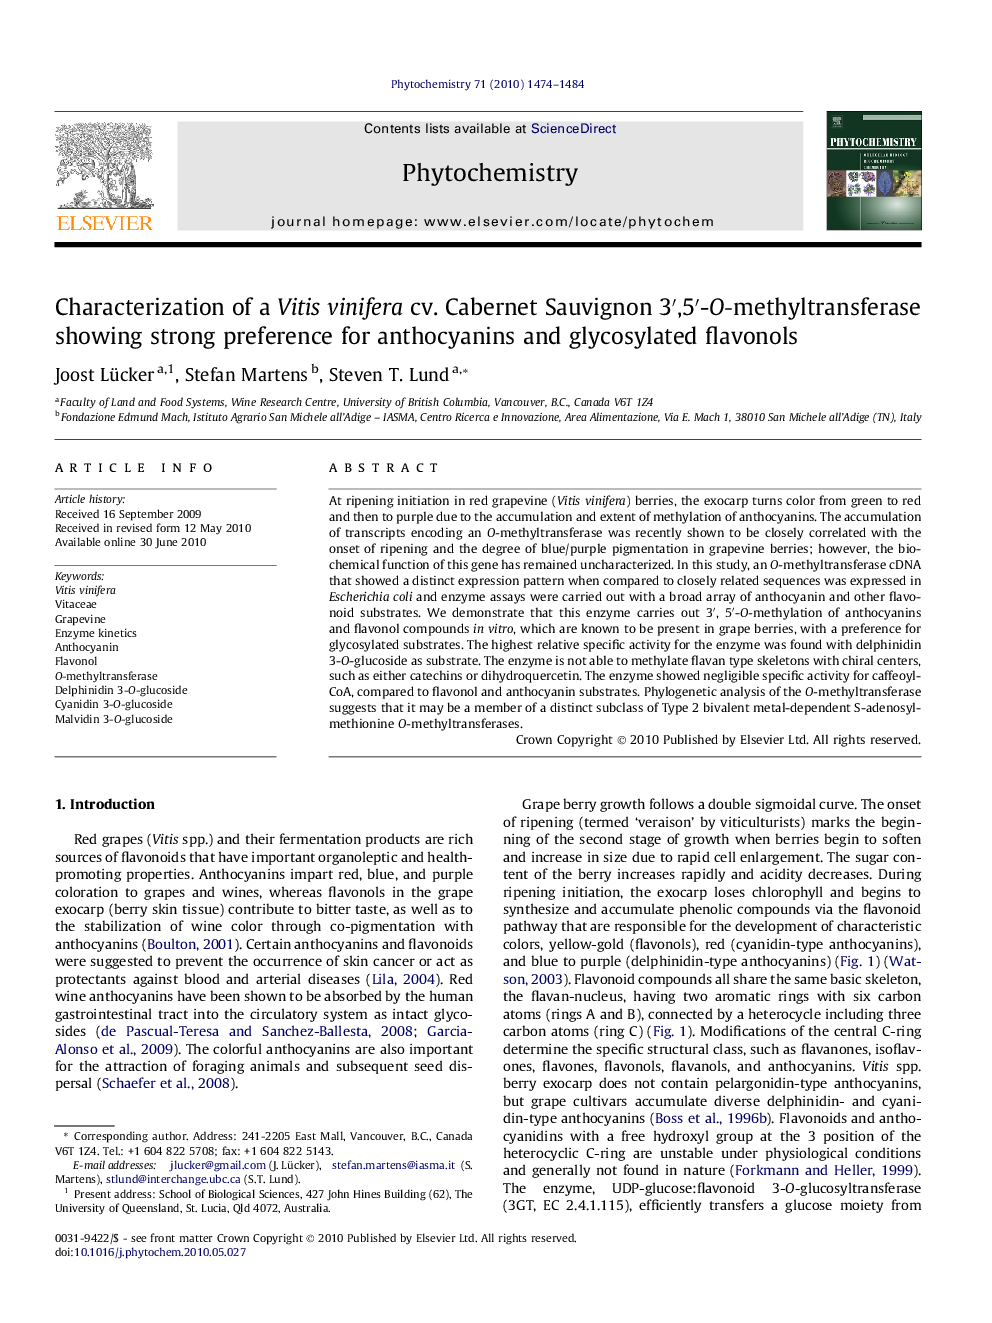 Characterization of a Vitis vinifera cv. Cabernet Sauvignon 3â²,5â²-O-methyltransferase showing strong preference for anthocyanins and glycosylated flavonols